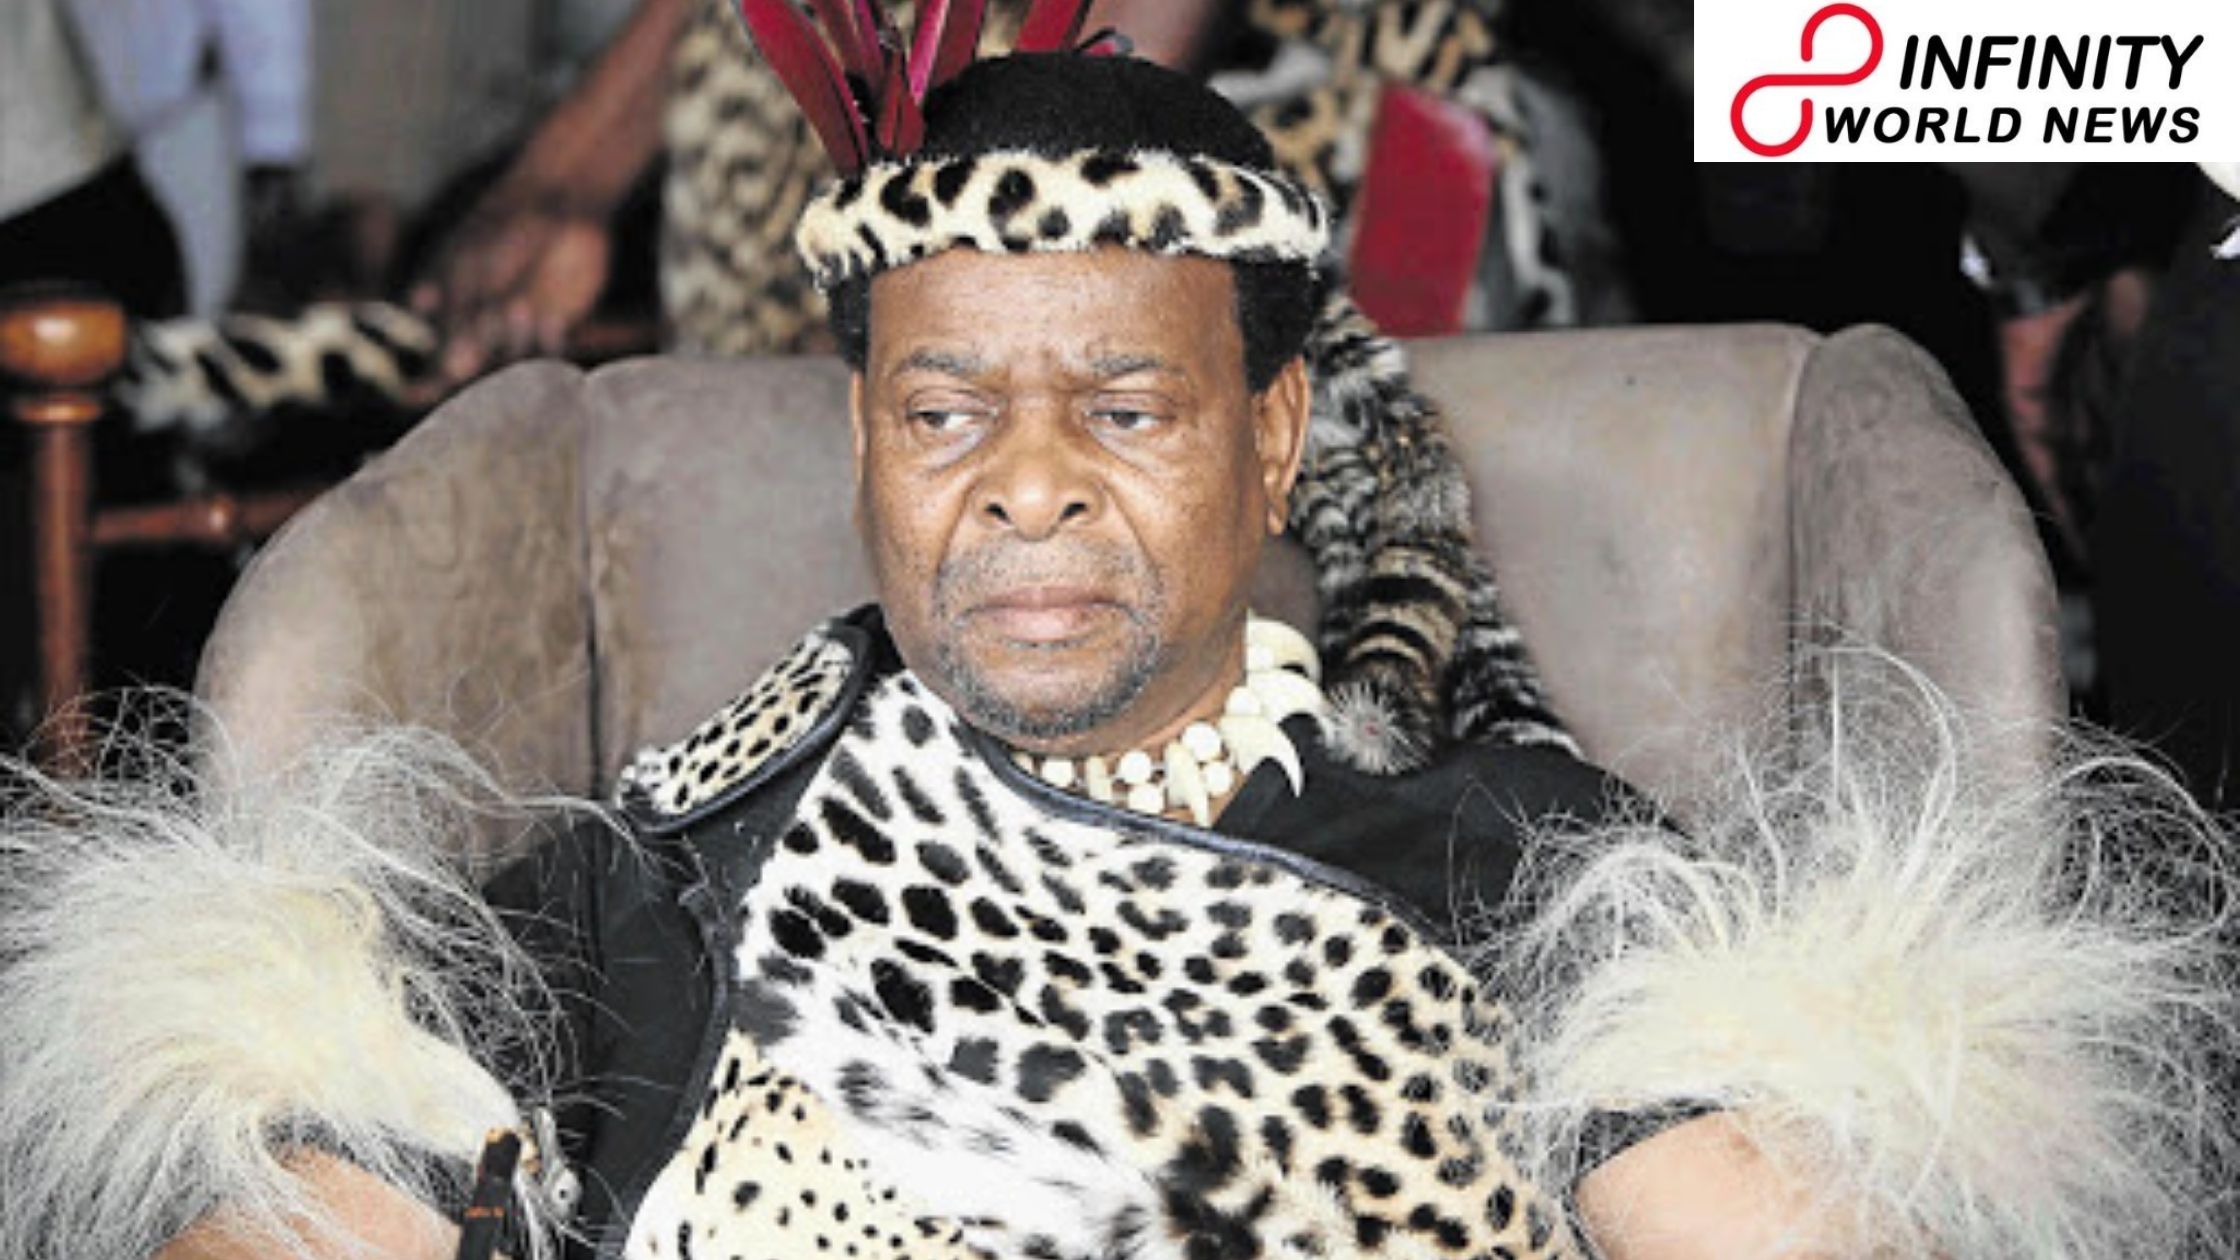 Zulu King Goodwill Zwelithini kicks the bucket in South Africa matured 72